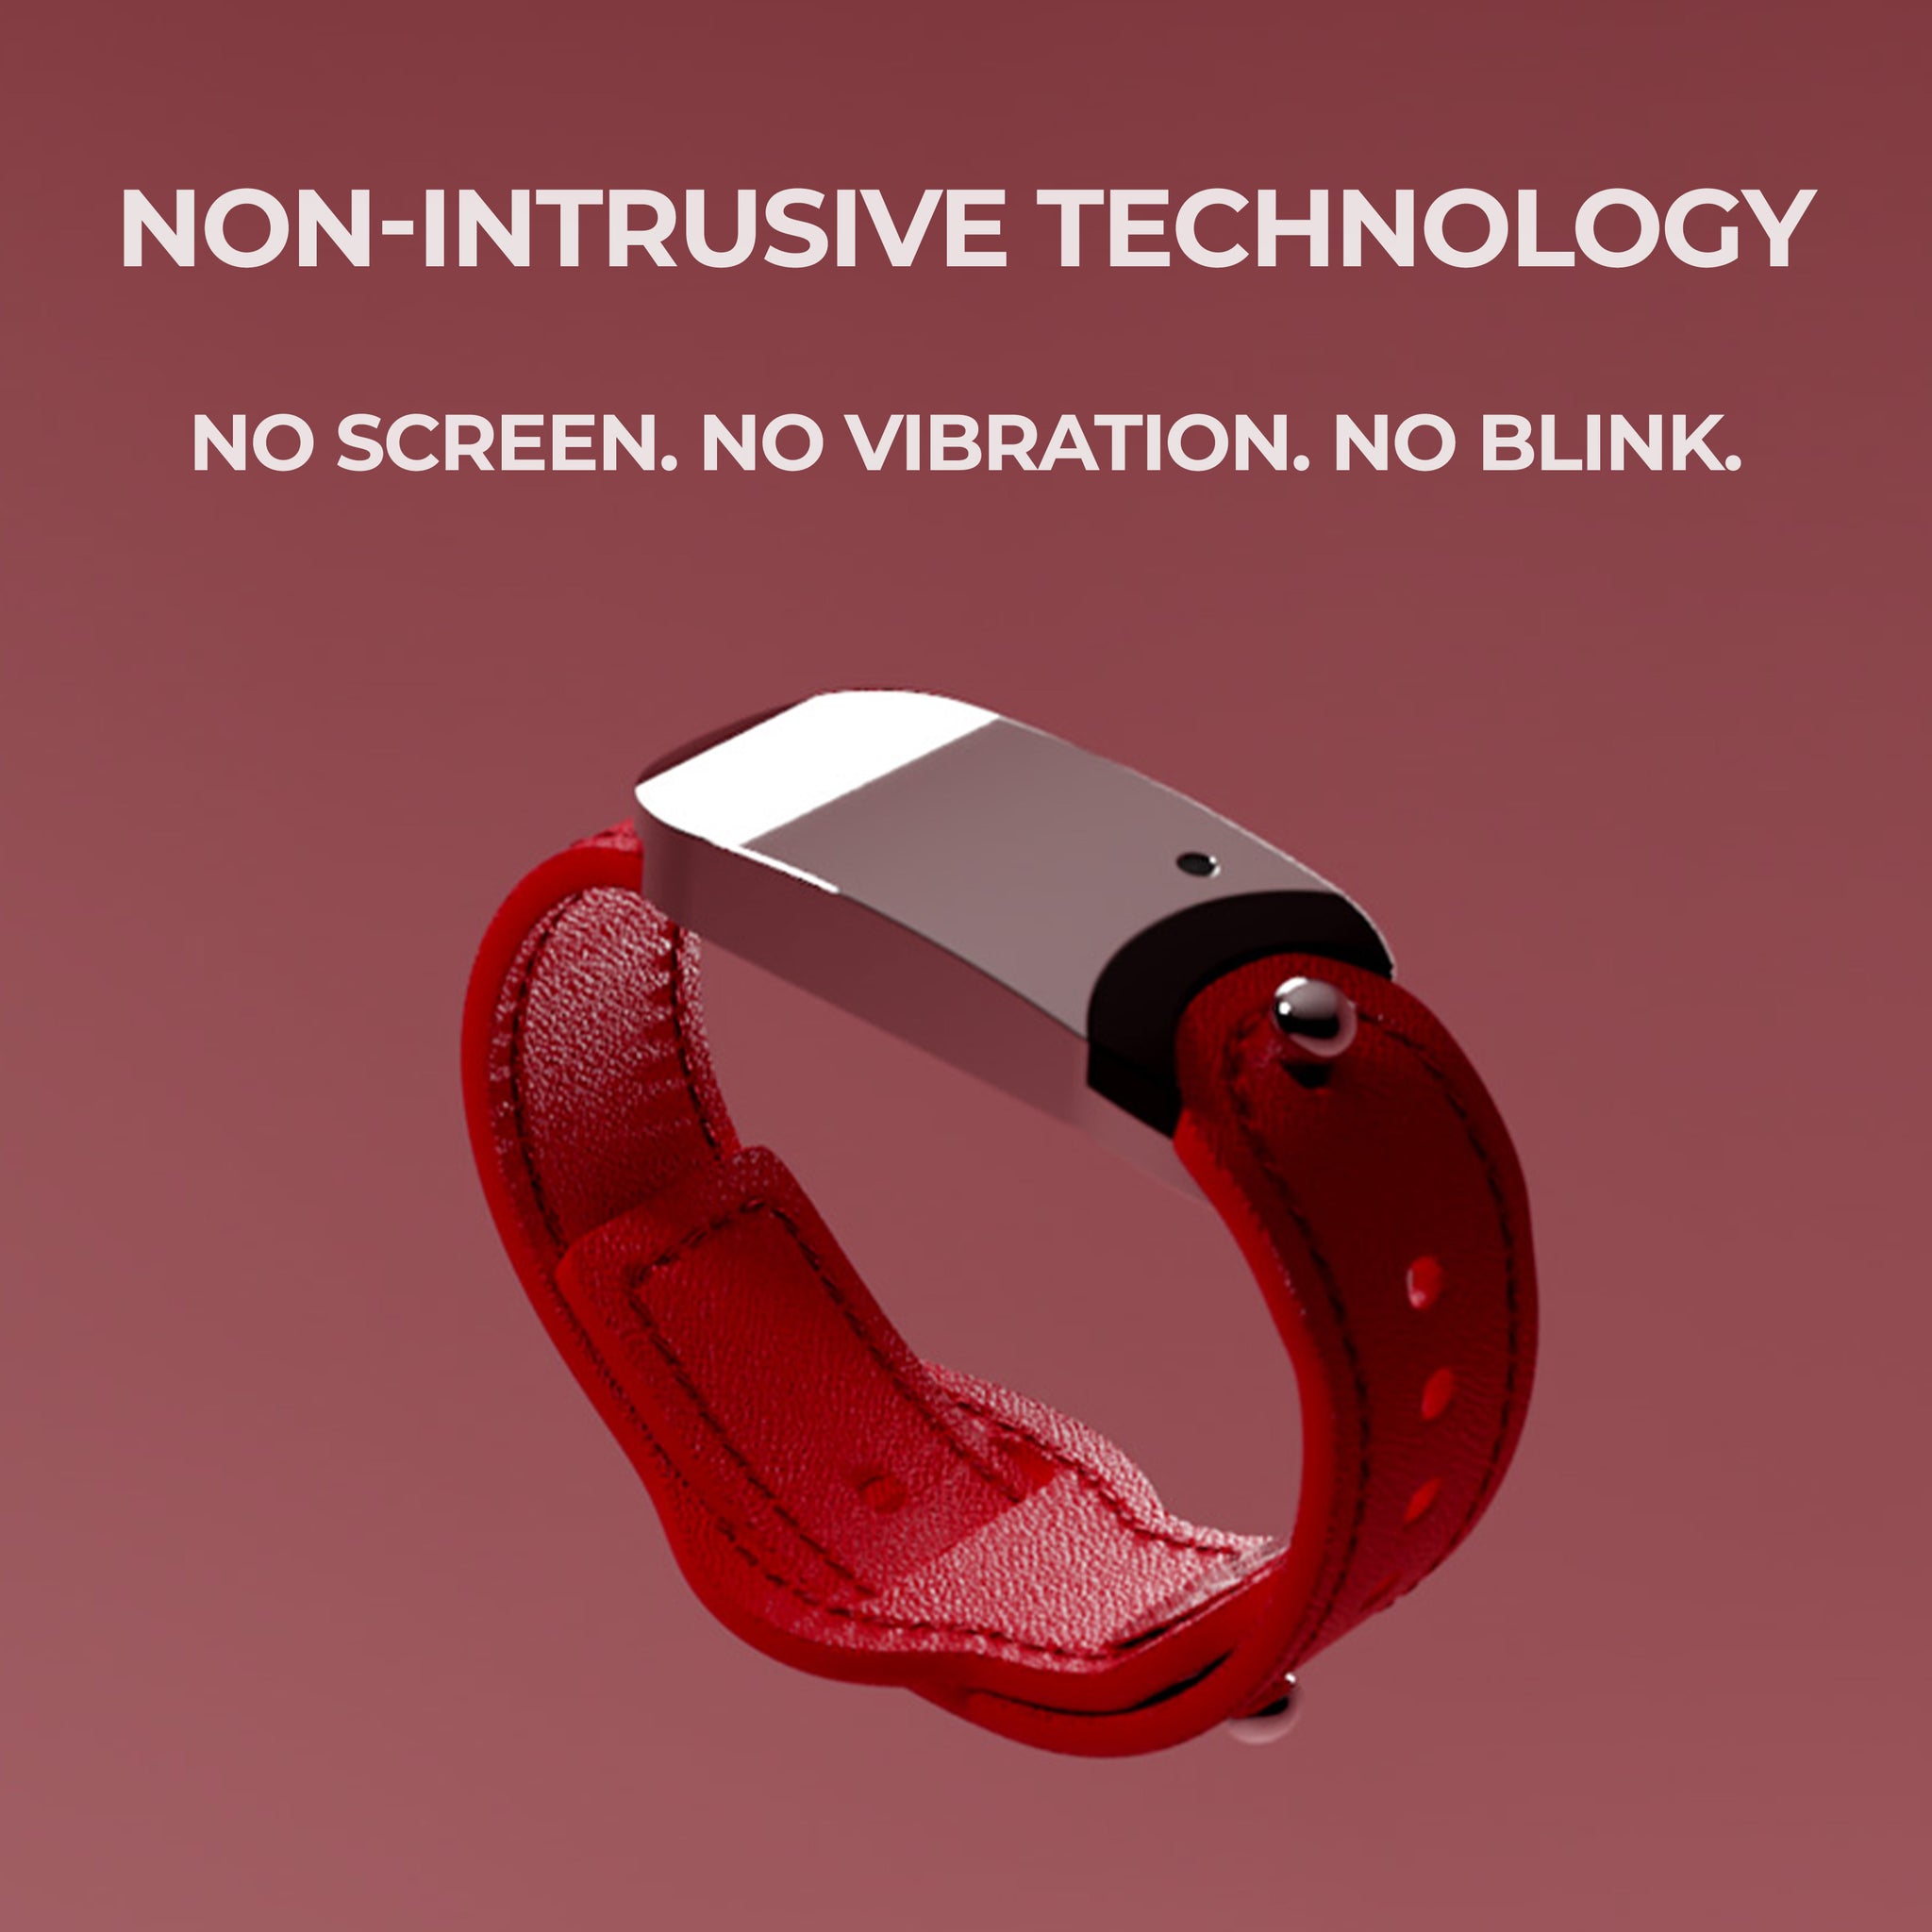 Non-intrusive technology - Gema has no screen, it doesn't vibrate